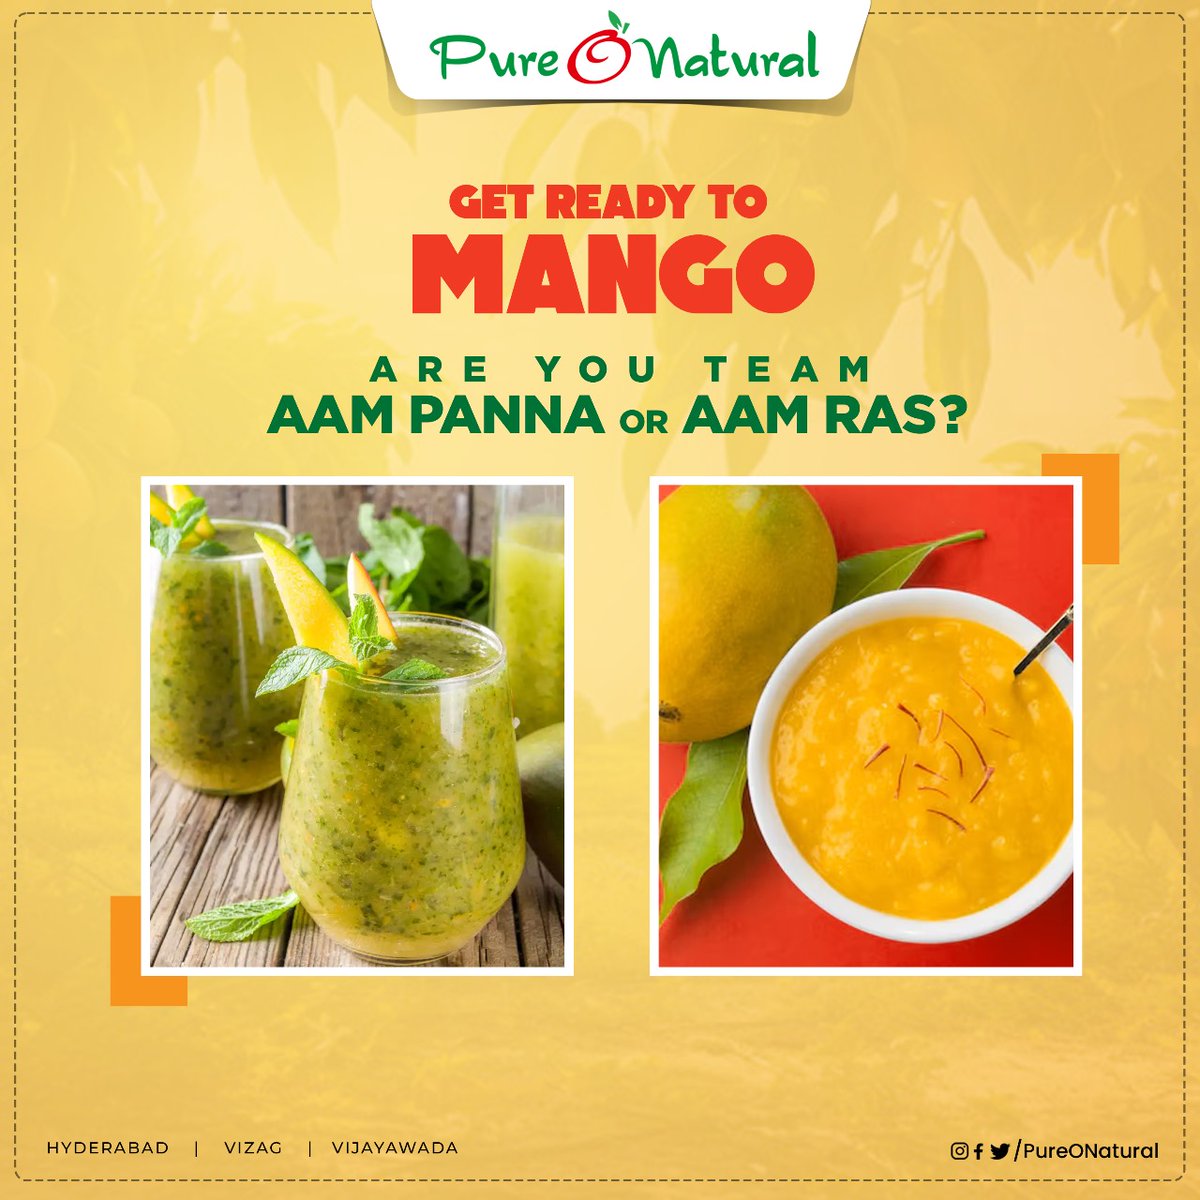 Mango Season is Here! Which team are you on? Team Aam Panna or Aam Ras? 🥭

#PureONatural #Hyderabad #Vizag #Vijaywada #FarmFresh #Mango #MangoSeason #AamRas